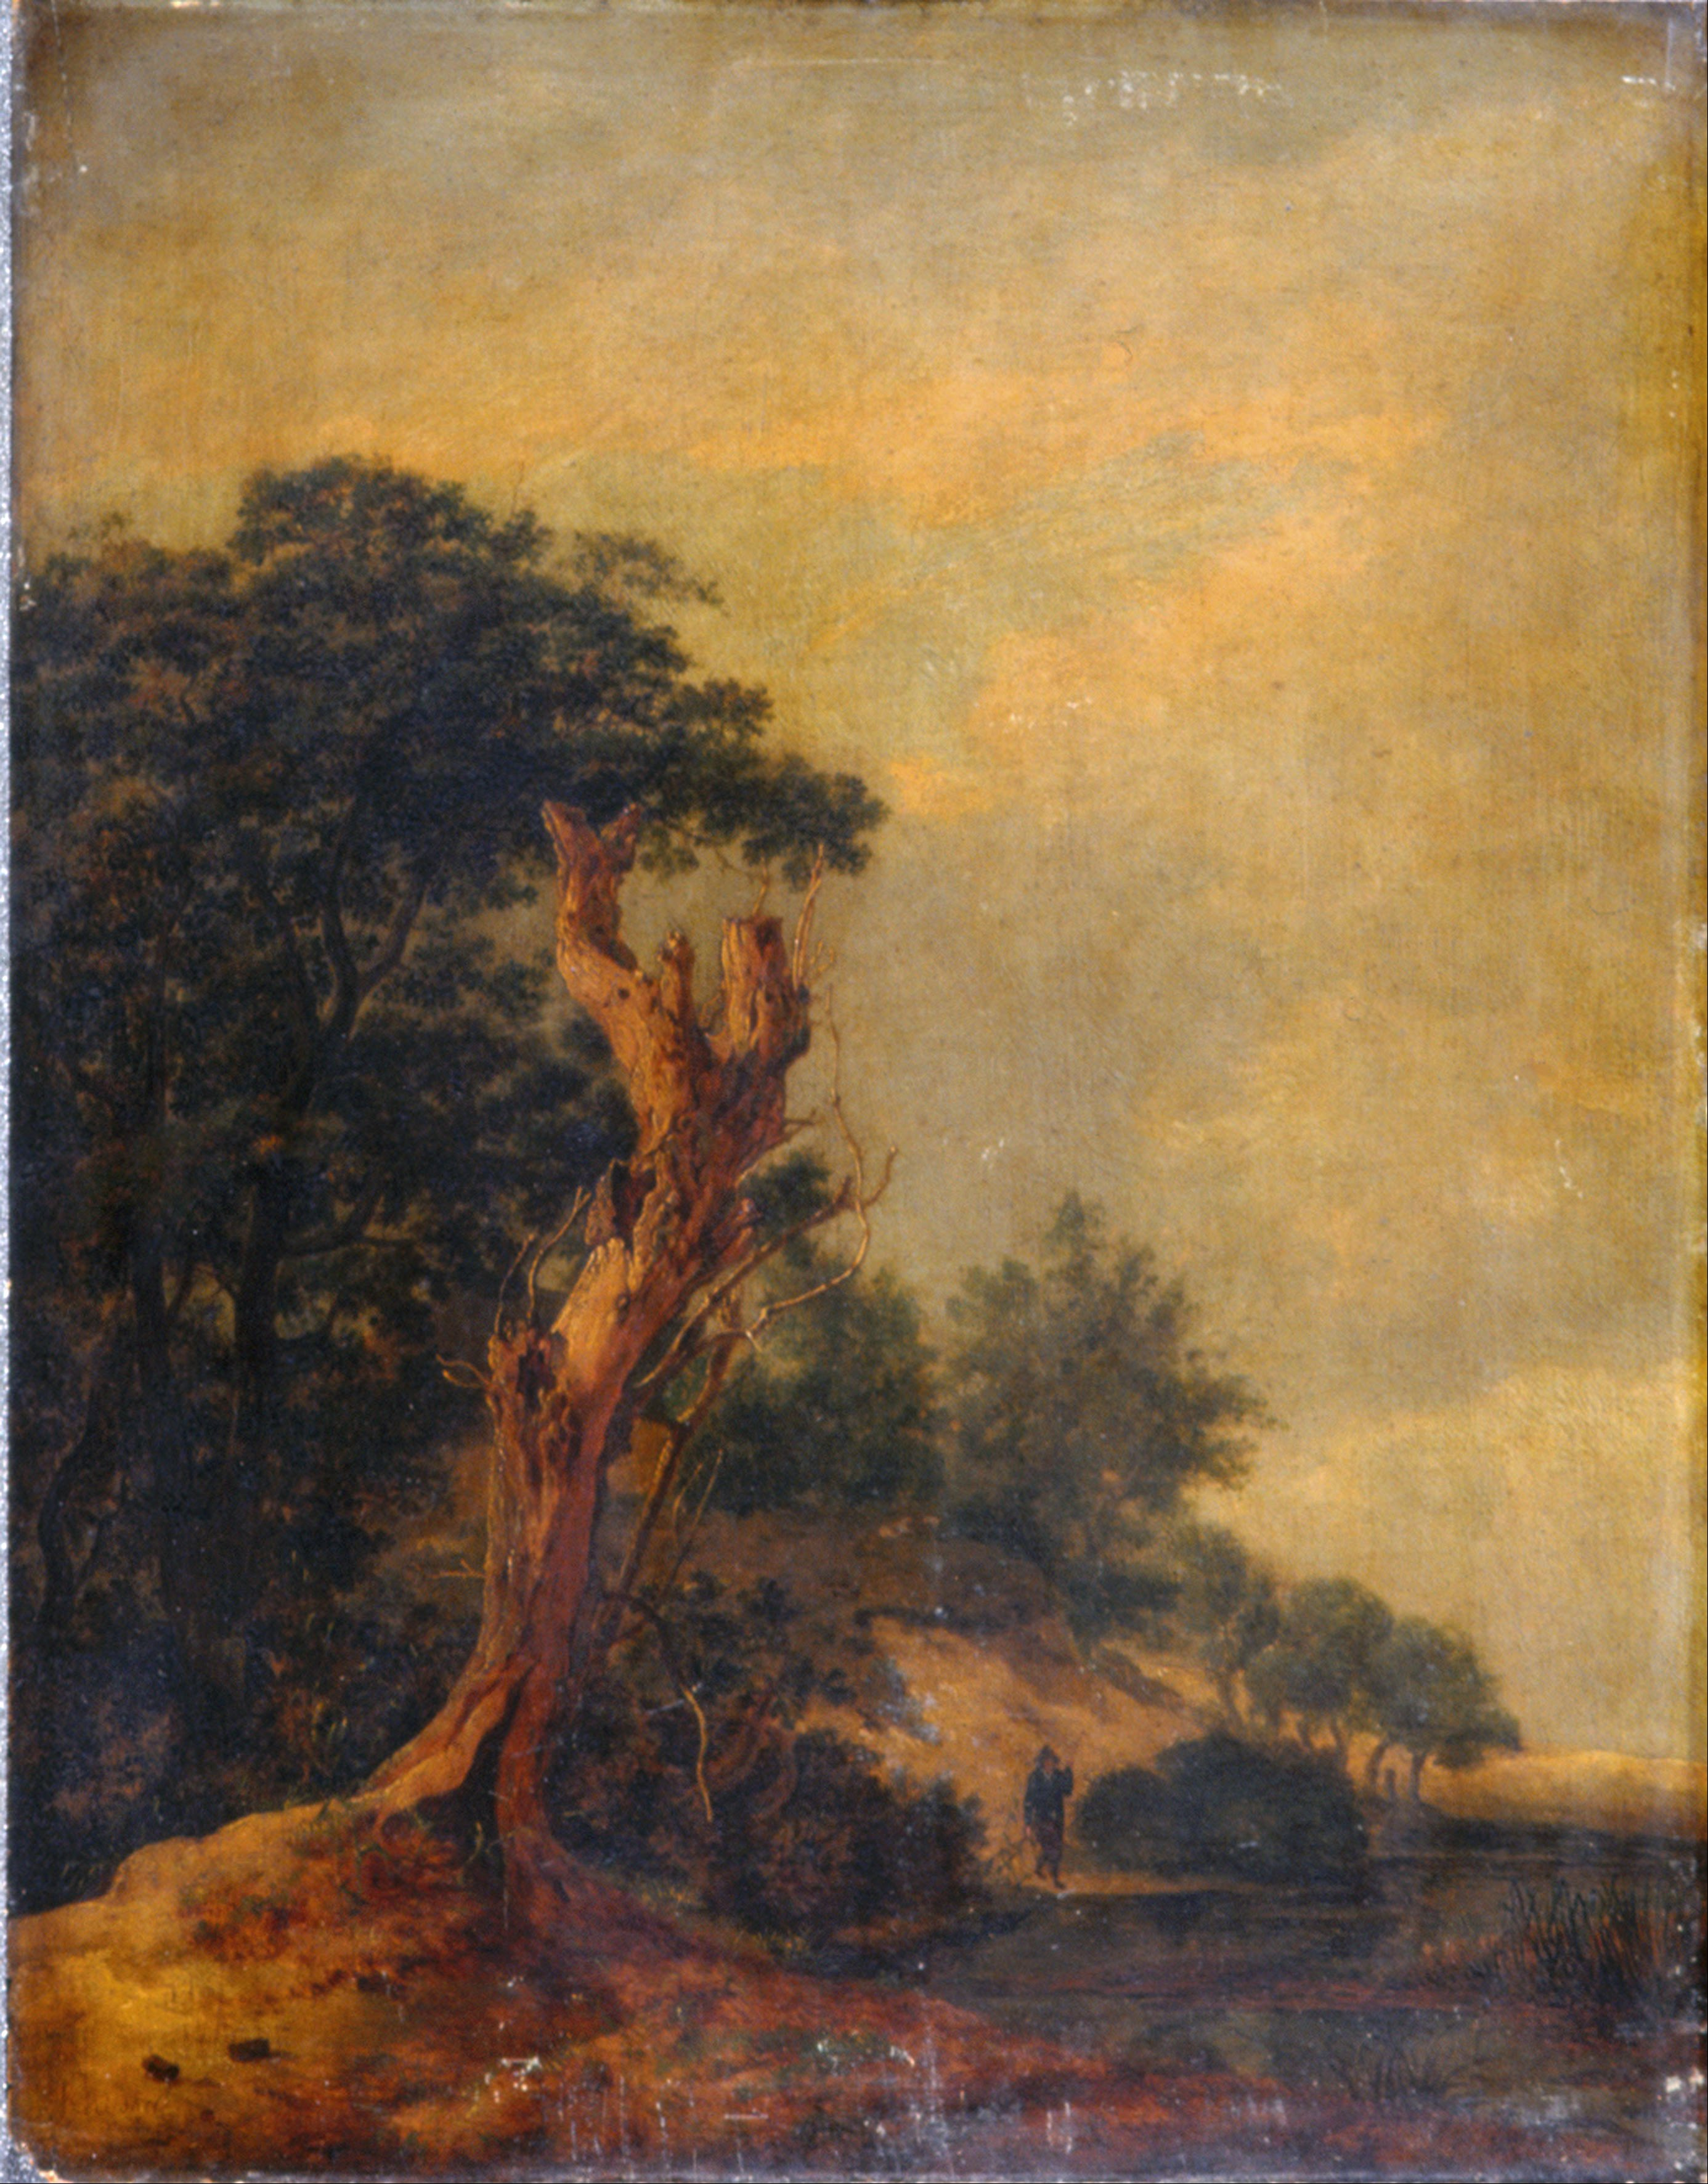 Woodburn, Samuel - Landscape in imitation of Jacob Ruisdael - Google Art Project